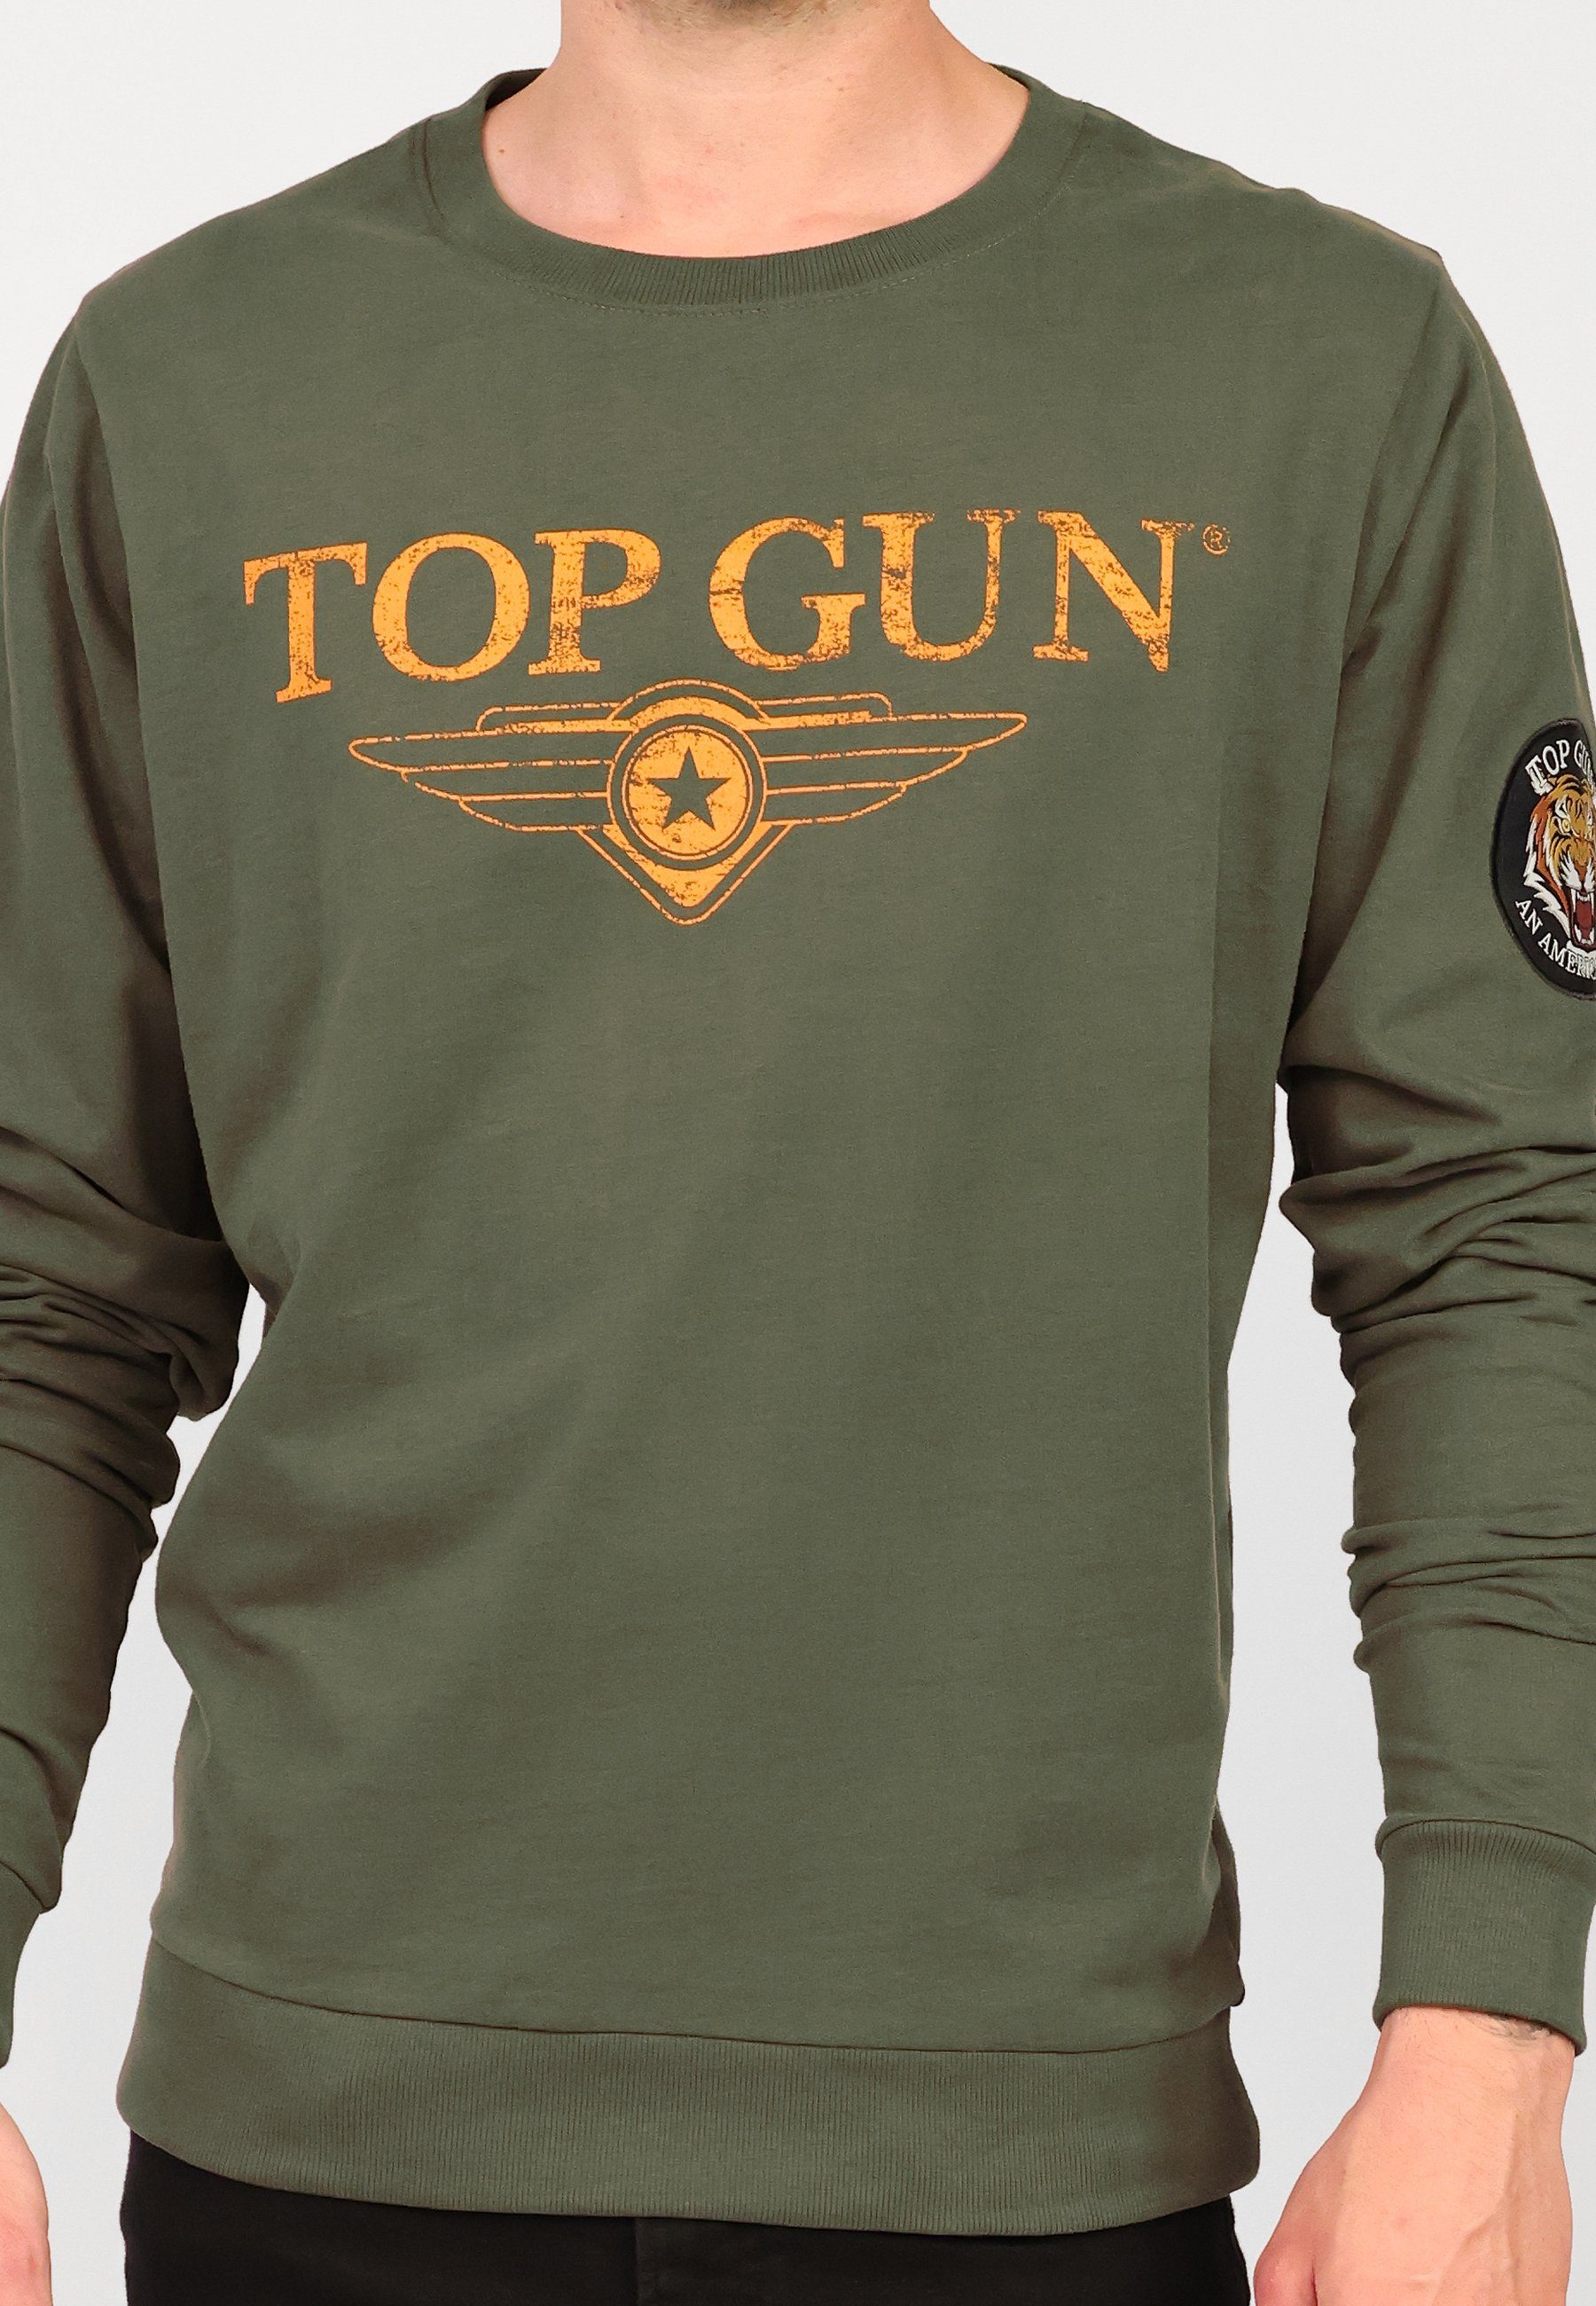 TOP GUN Sweater olive TG20213005